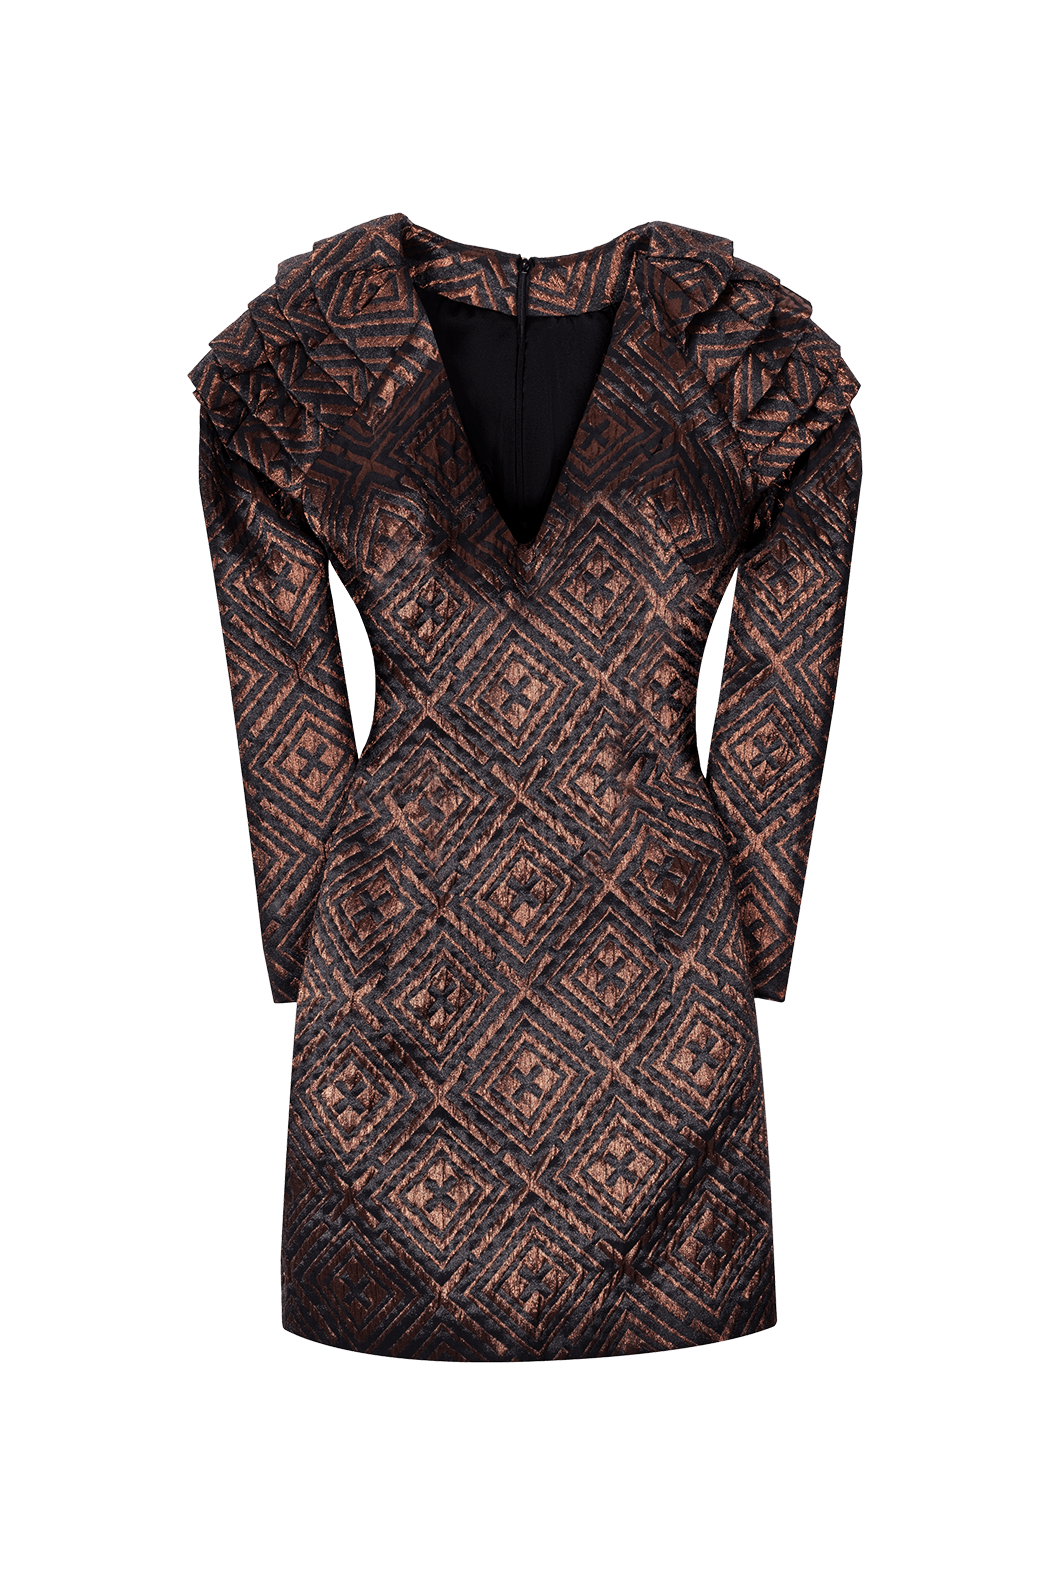 Black and copper ruffle dress flat